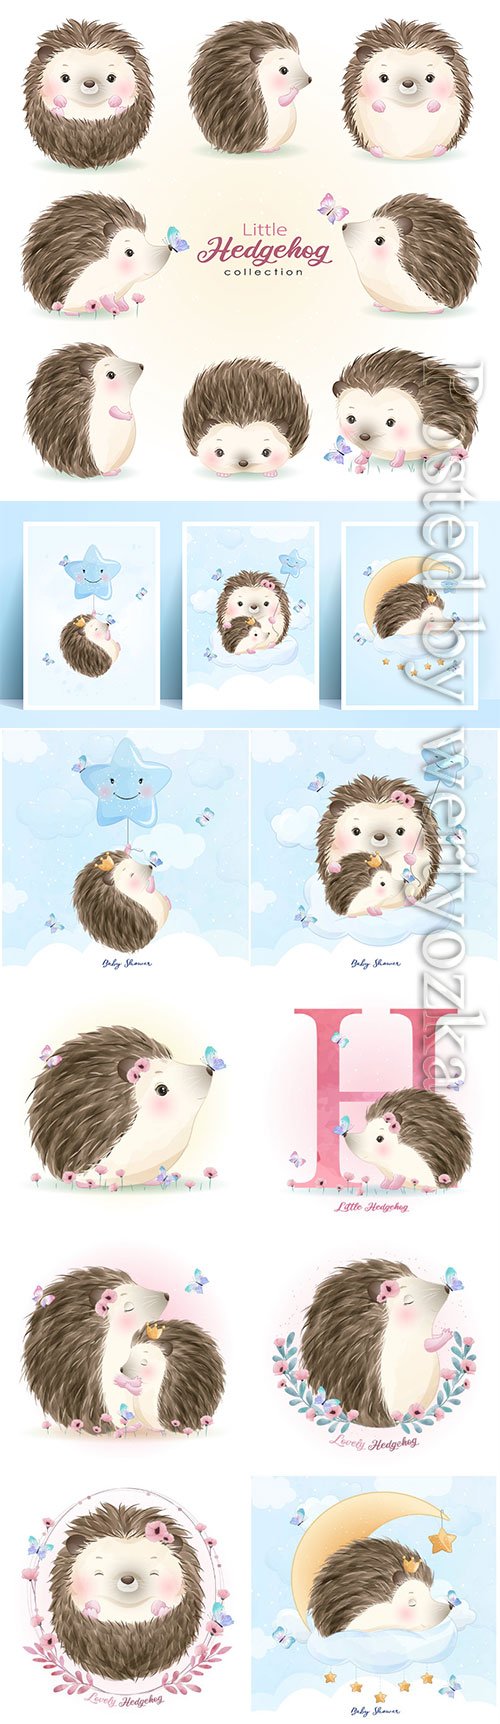 Cute doodle hedgehog set with watercolor vector illustration